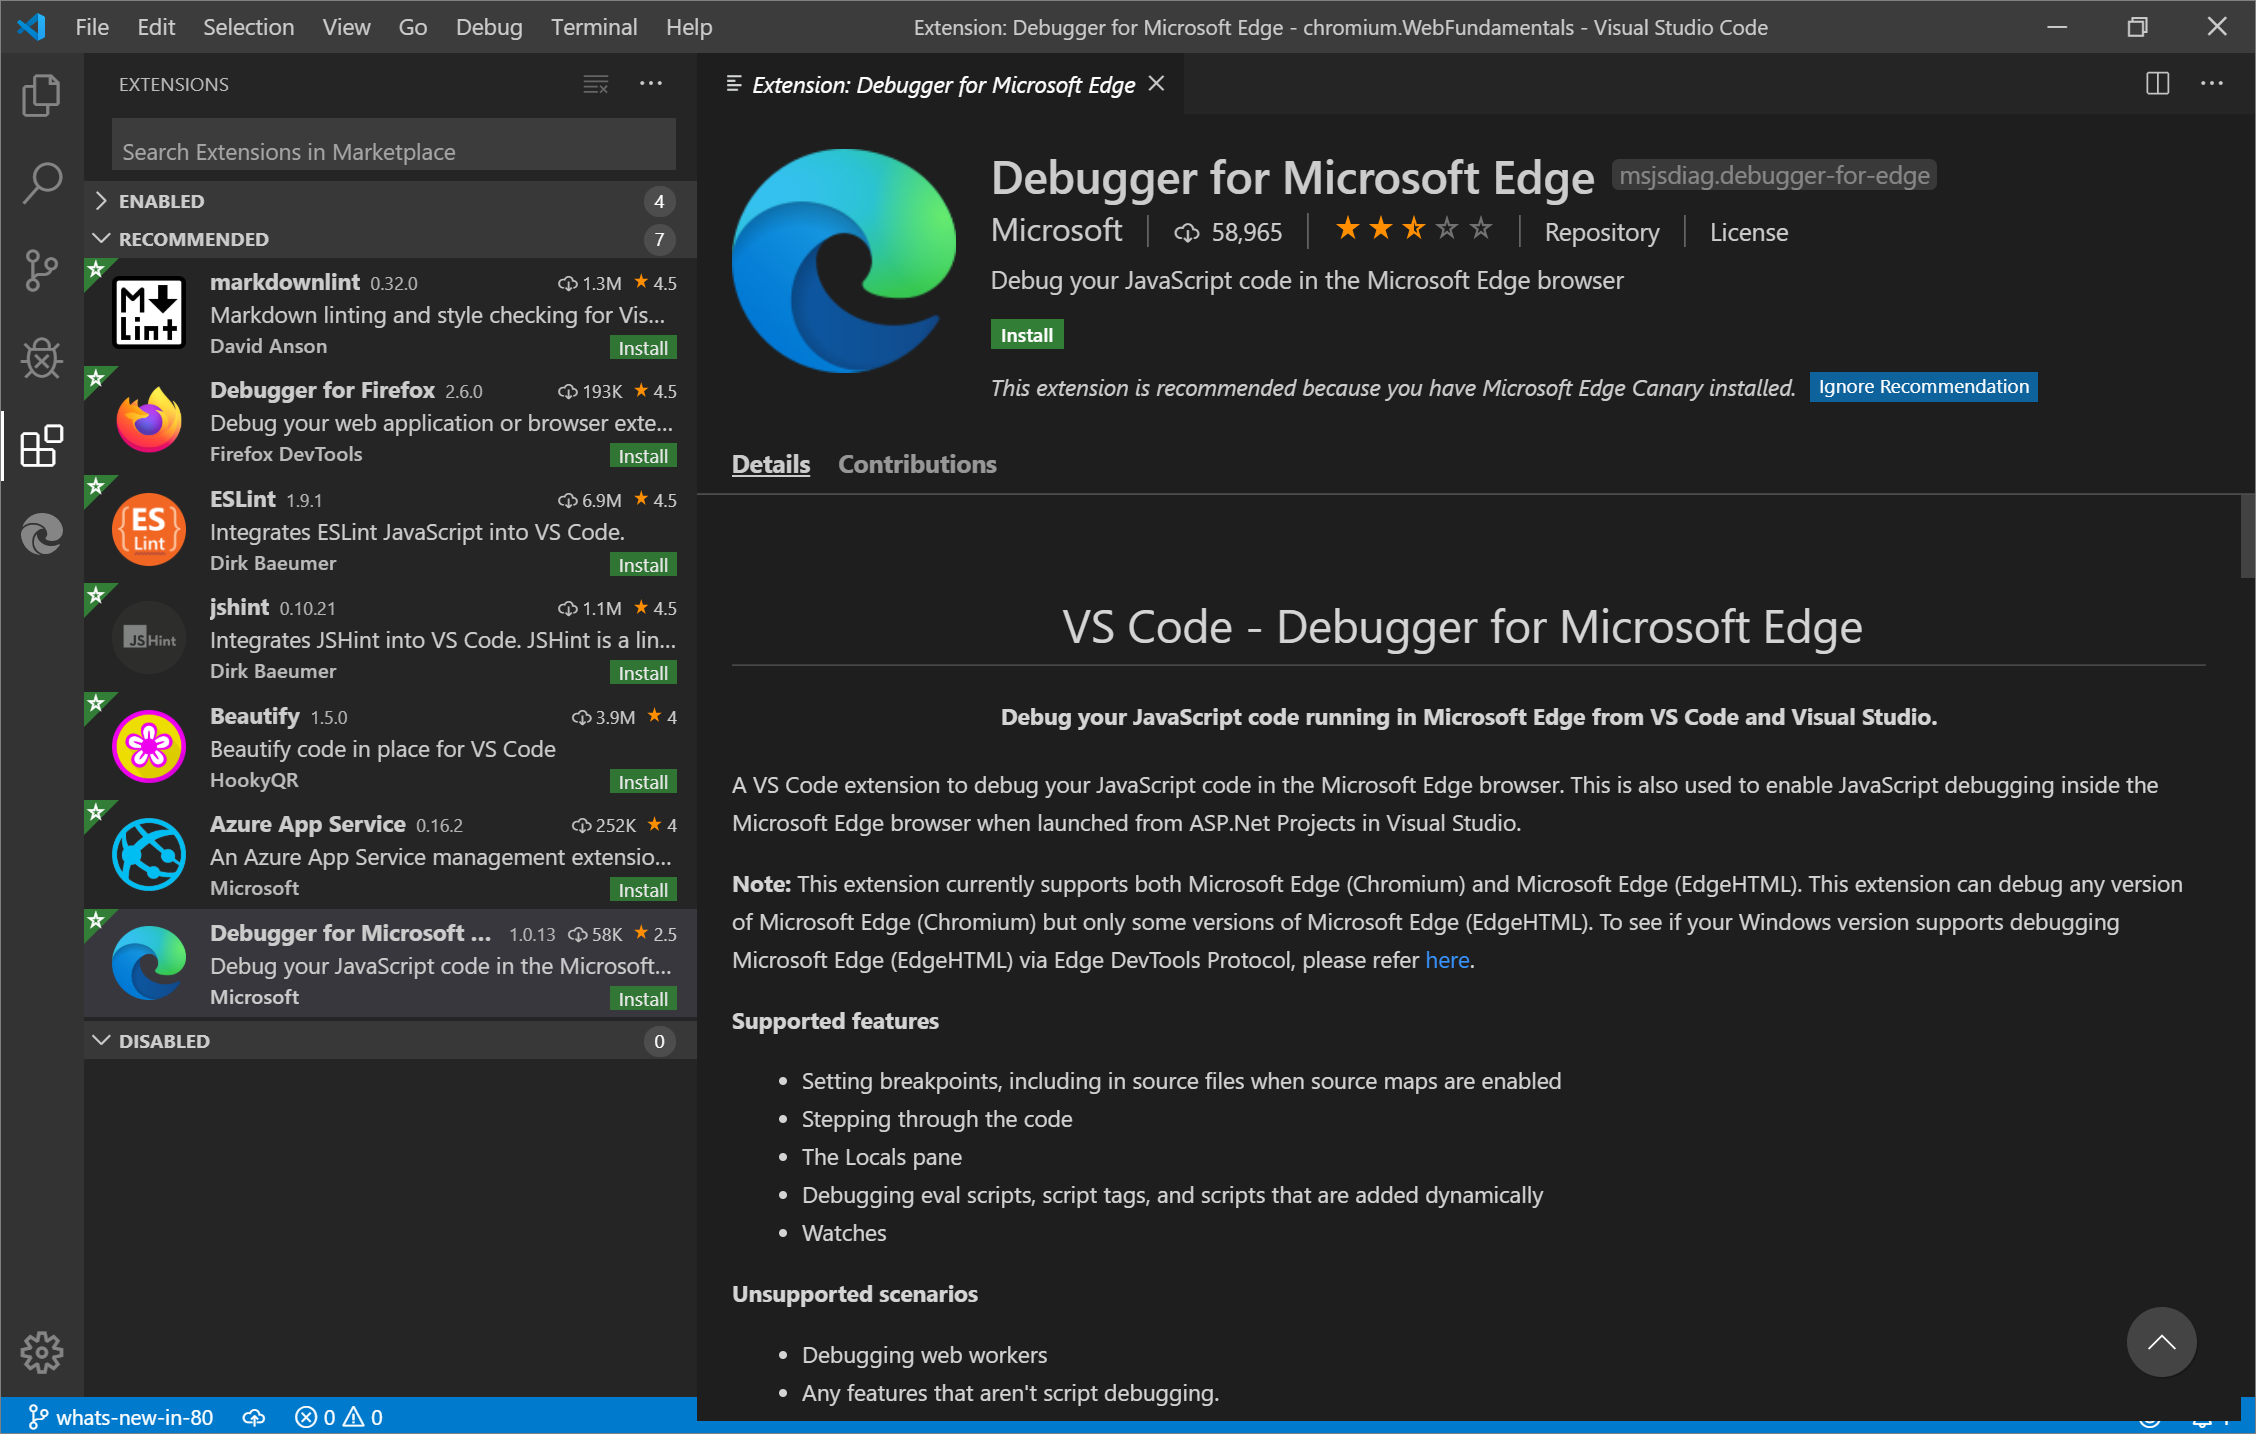 The Debugger for Microsoft Edge Extension in Visual Studio Code